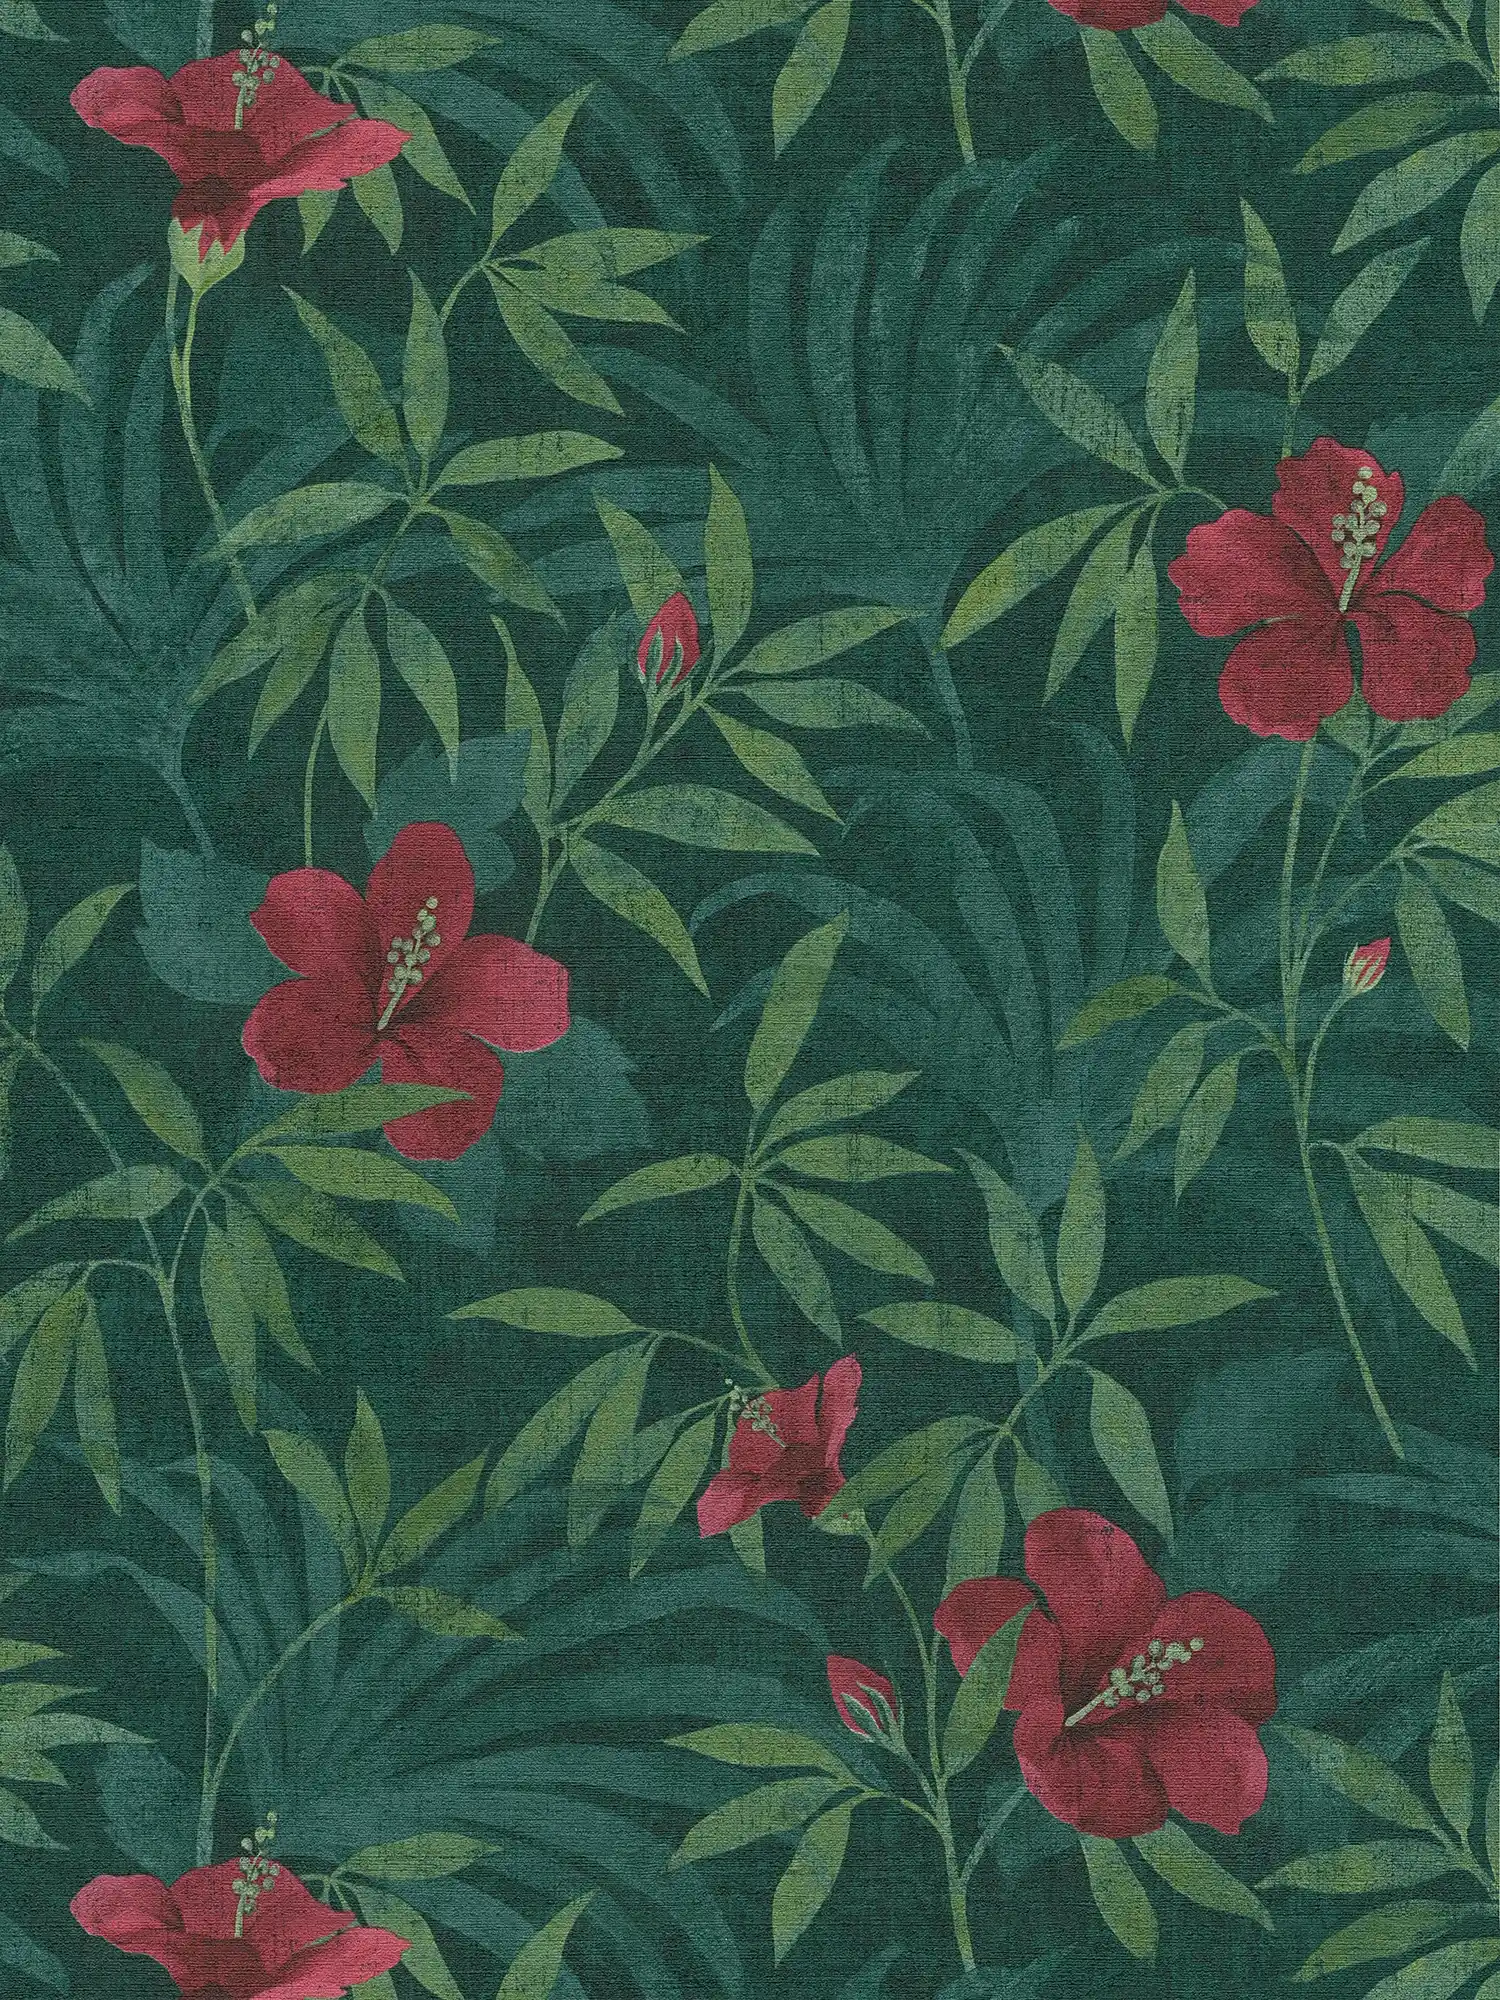 Jungle wallpaper green jungle & hibiscus flowers - green, red
